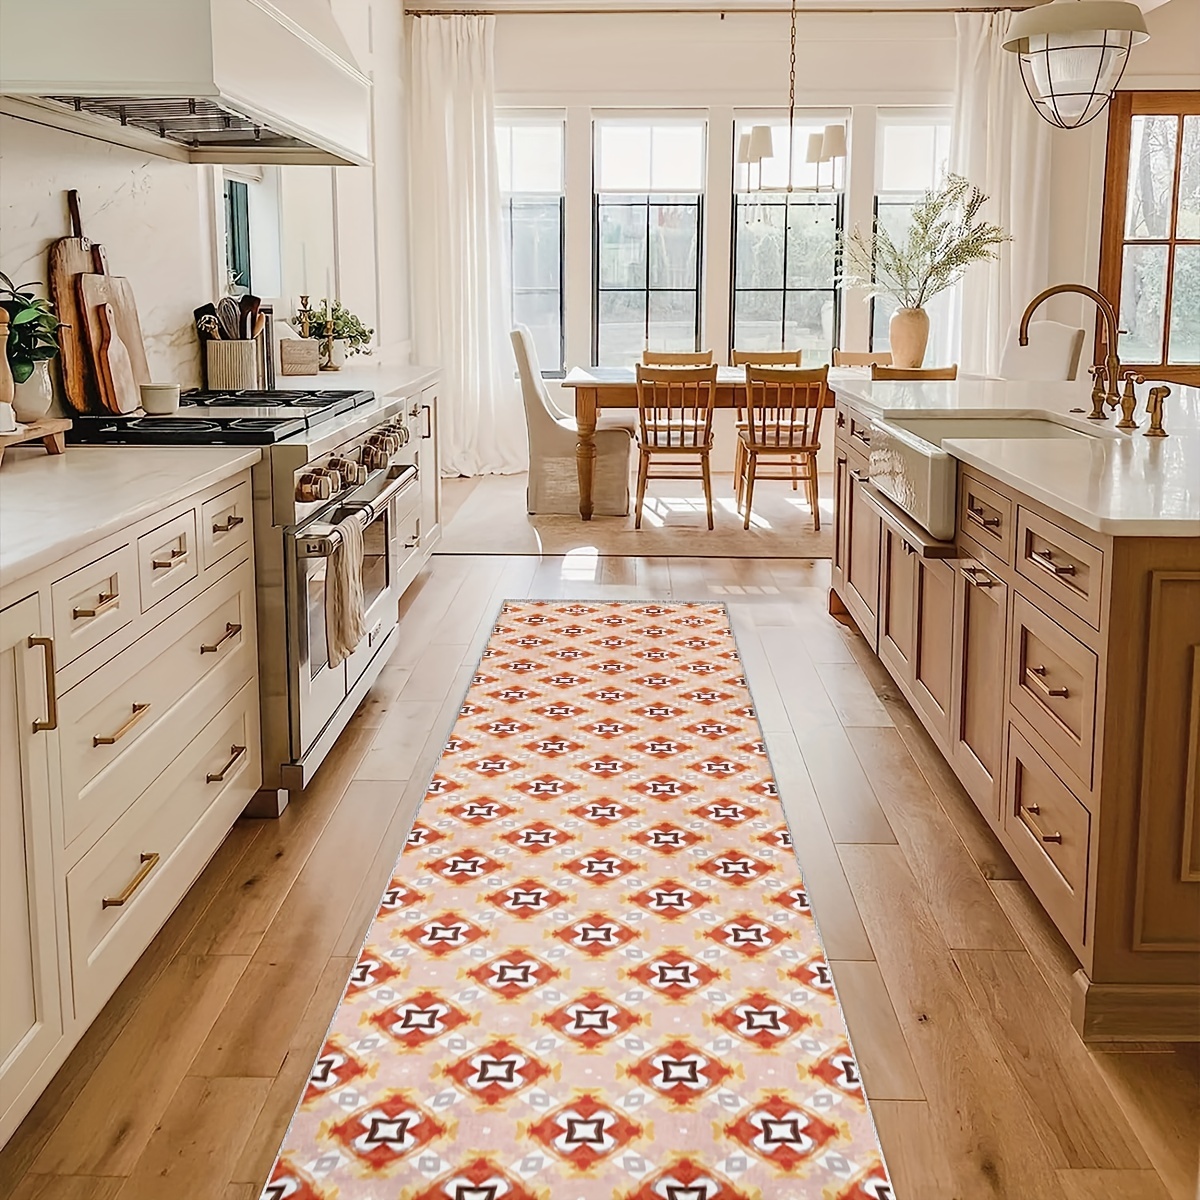 Tapetes de cocina para piso, alfombras de cocina con patrón floral clásico  gris, tapete de cocina antifatiga, decoración de cocina, alfombra de